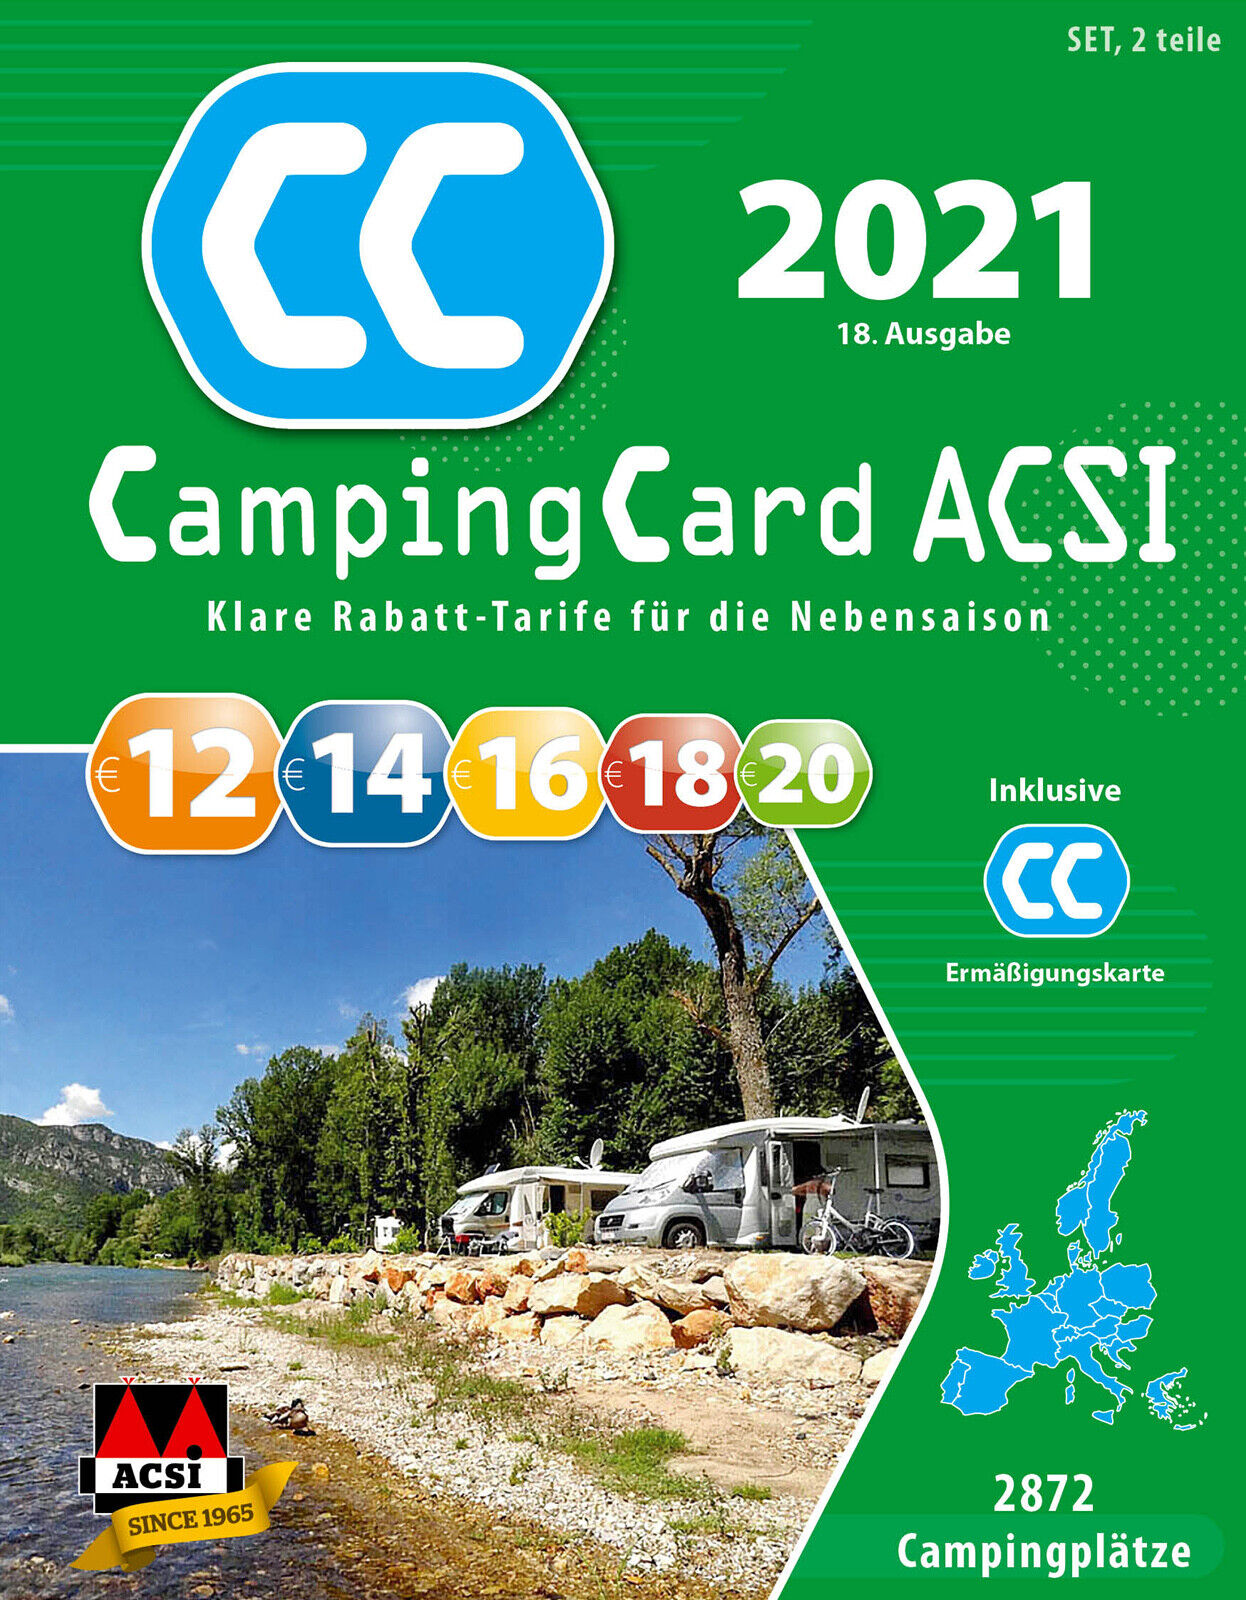 CampingCard ACSI Campingführer 2021 inklusive Ermäßigungskarte